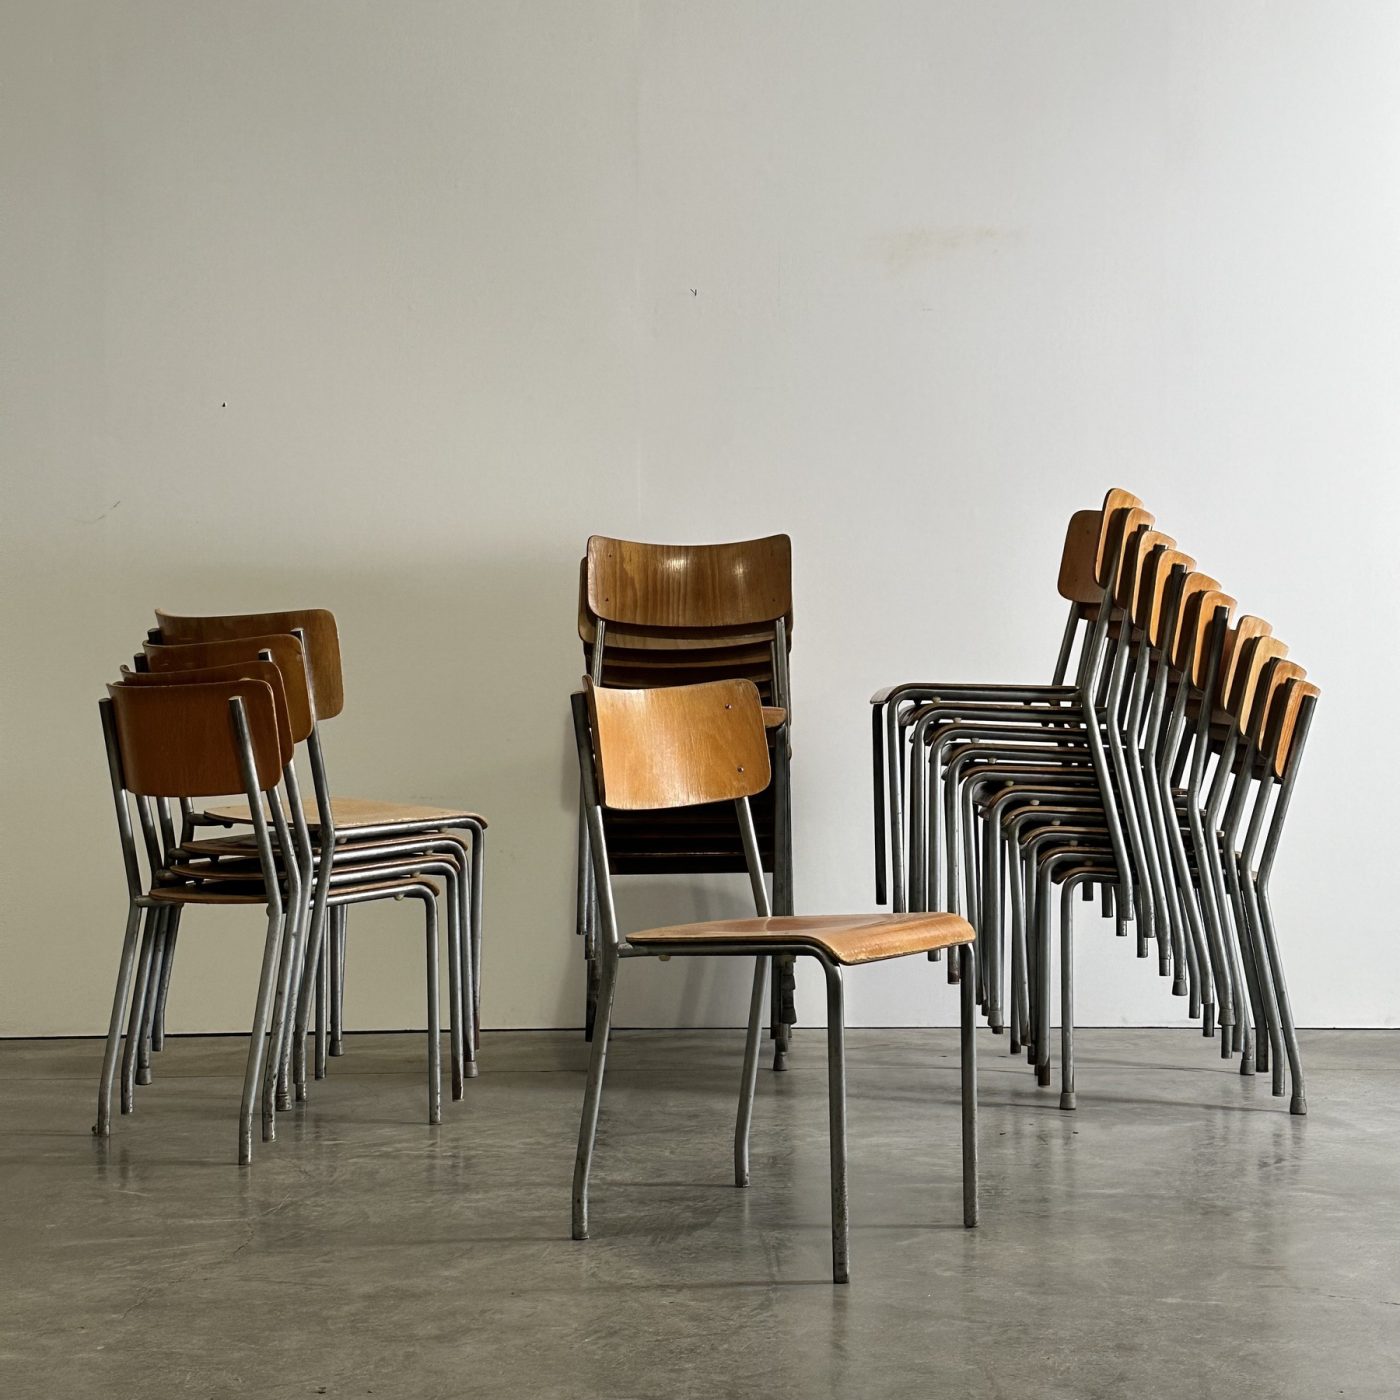 objet-vagabond-school-chairs0004